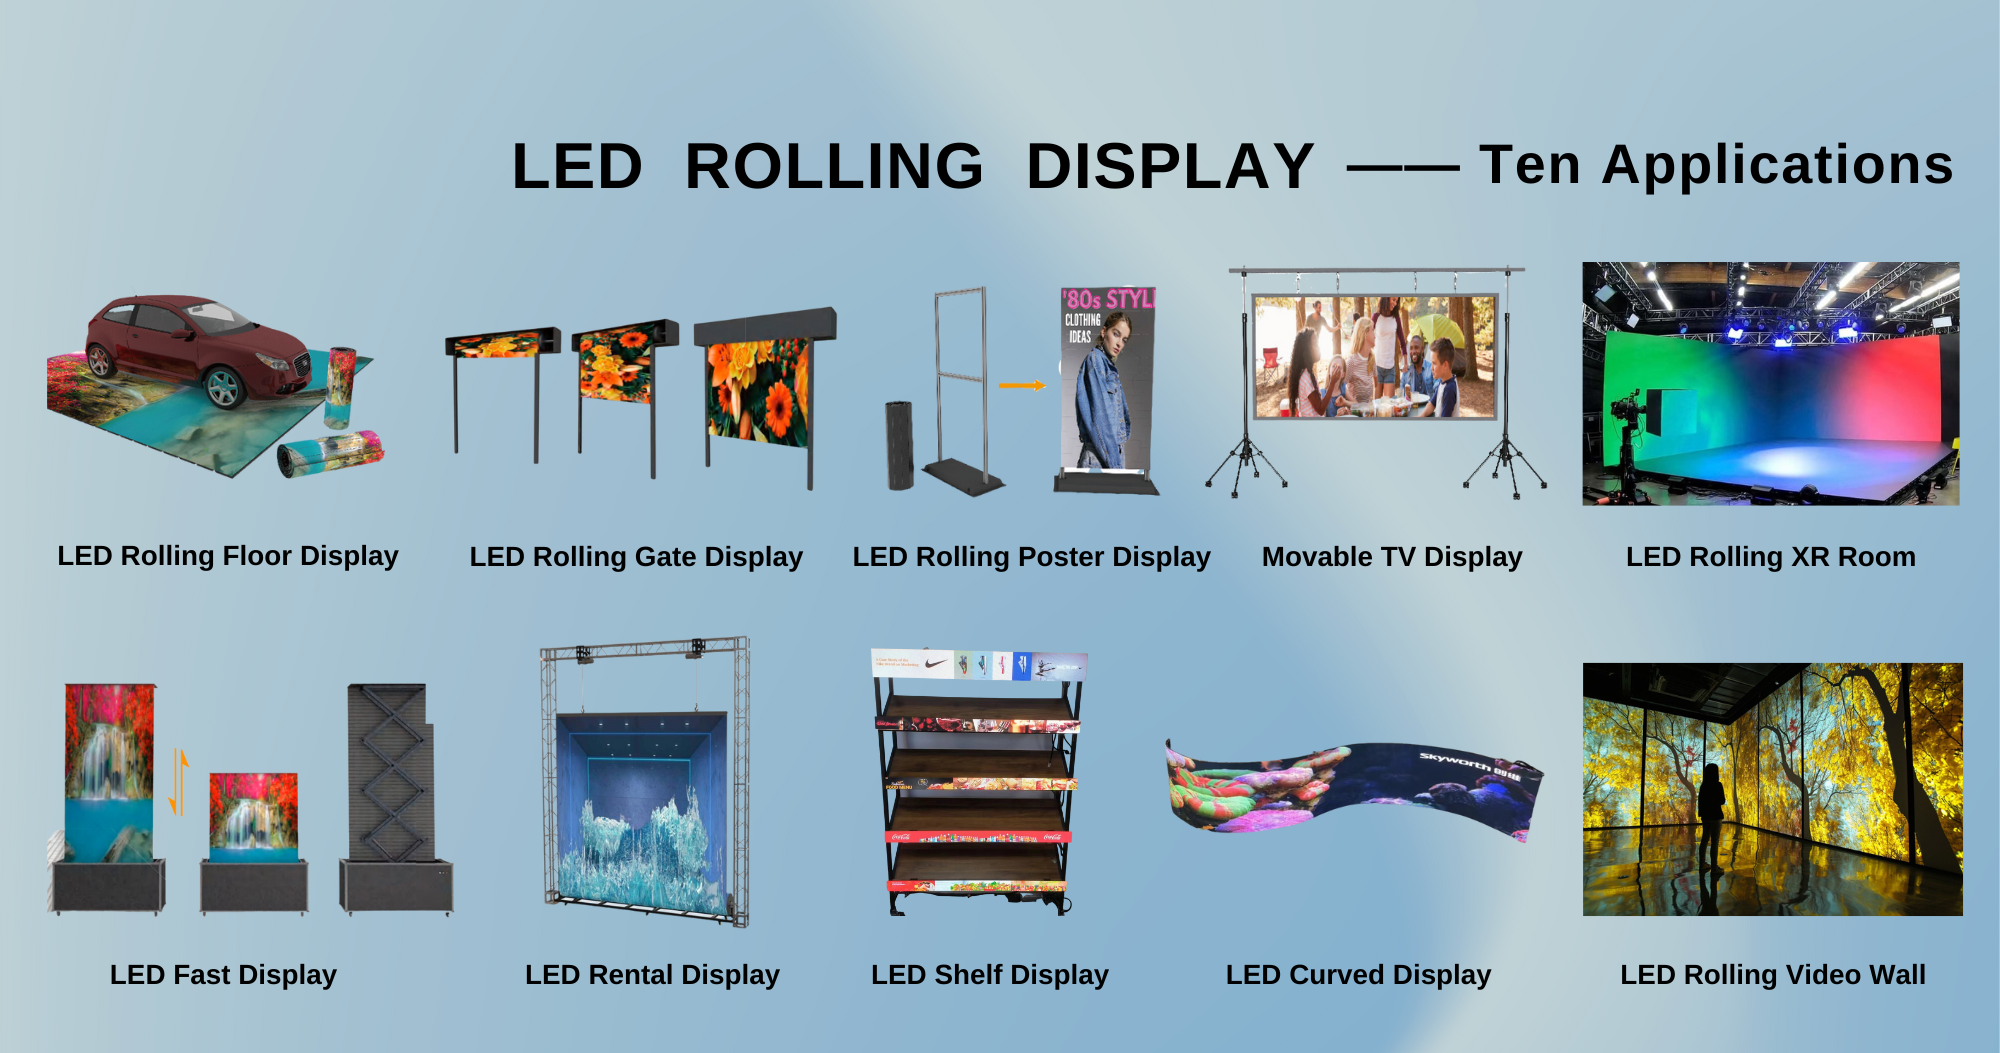 LED Rolling Display